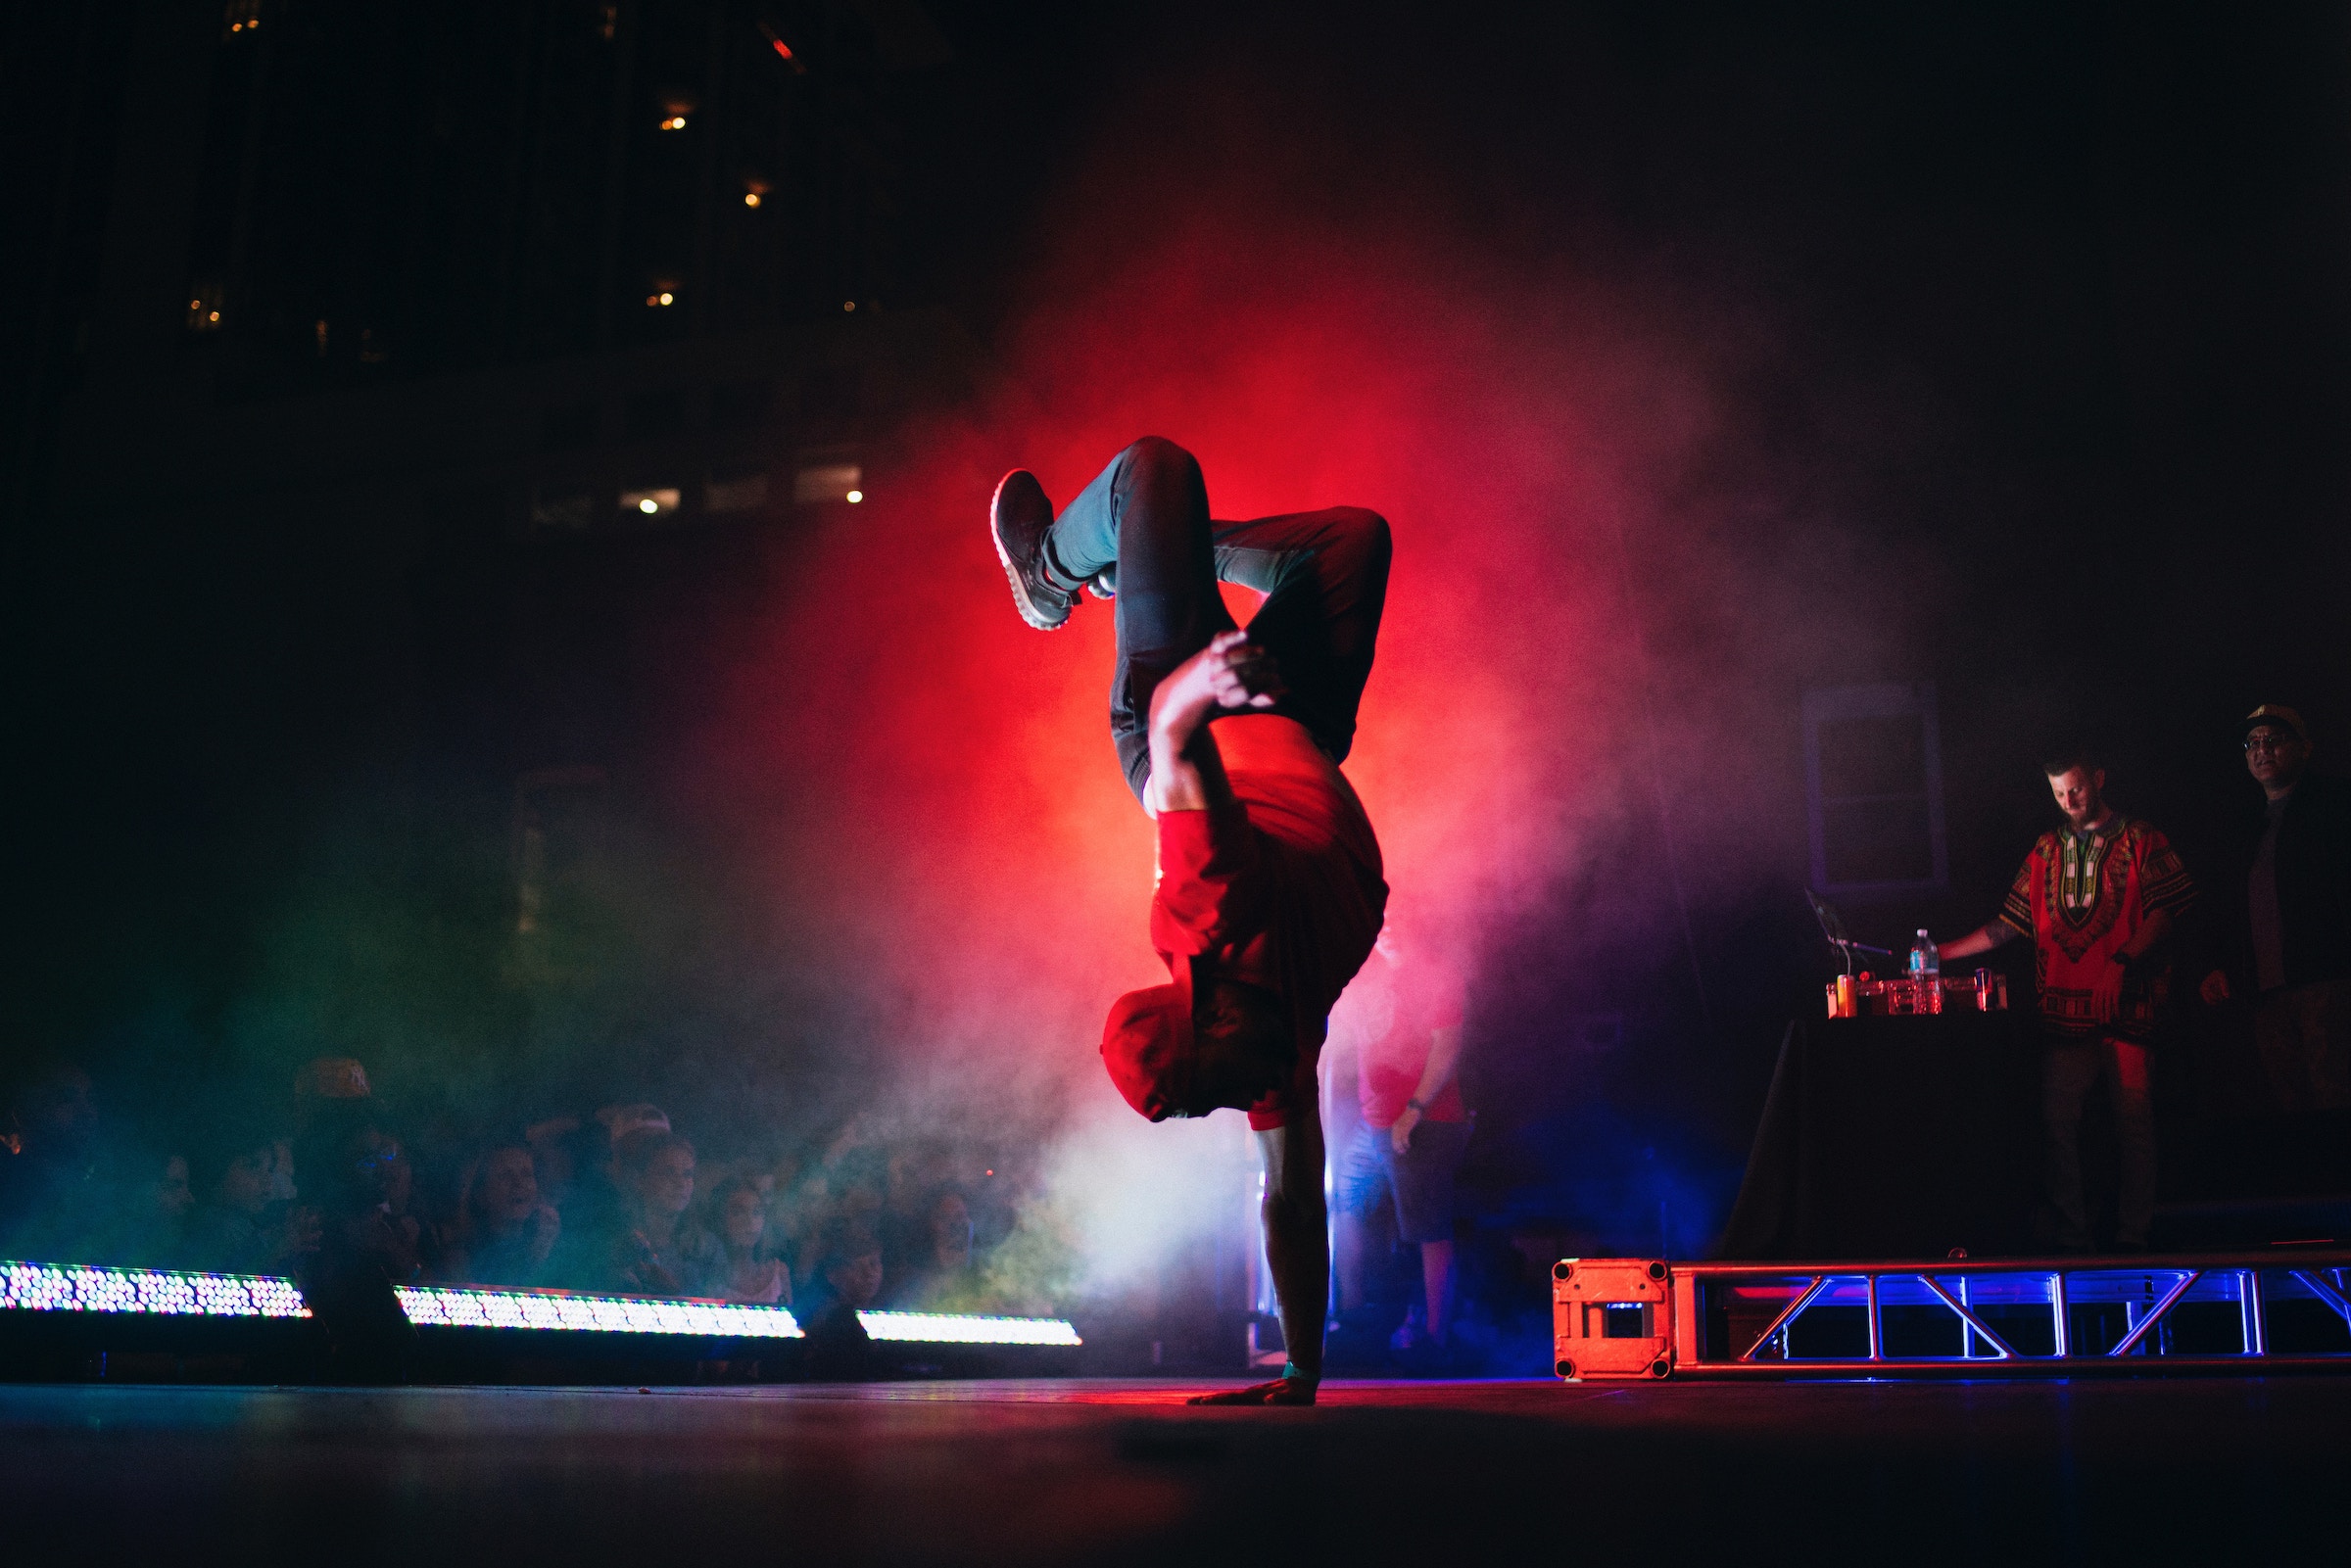 Breakdancer standing on one hand